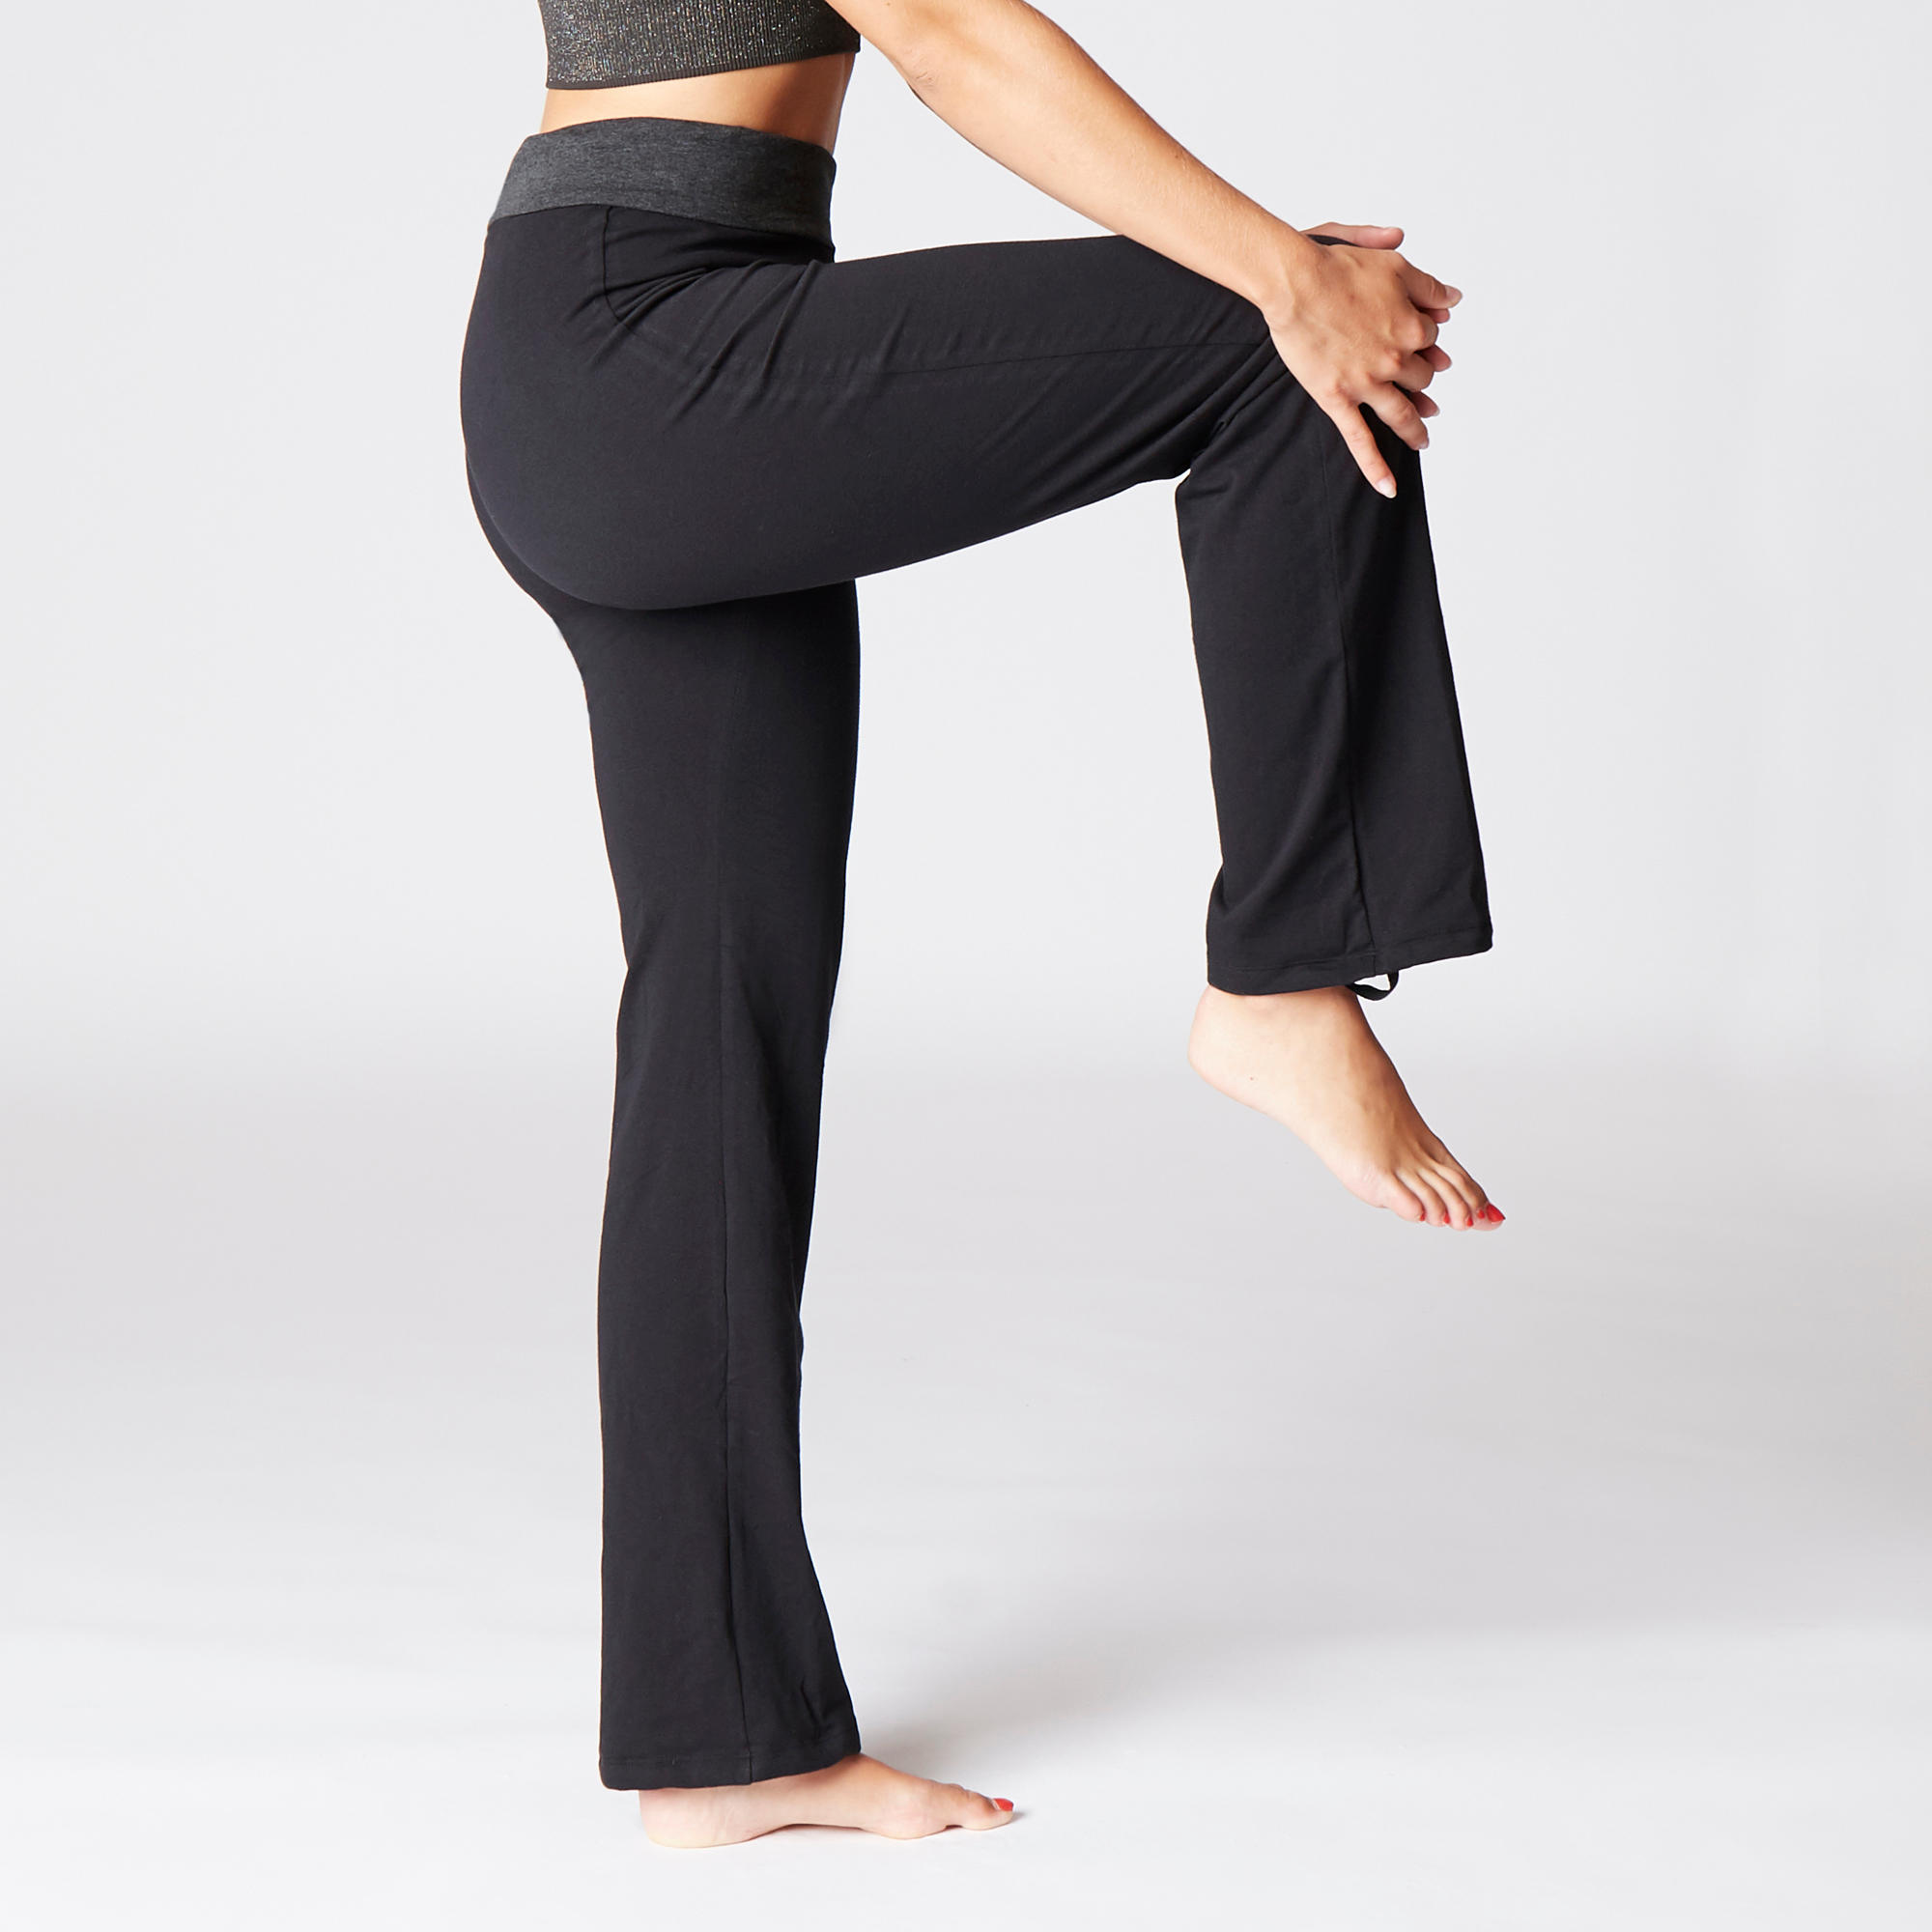 Women's Yoga Cotton Bottoms - Black/Grey 4/10